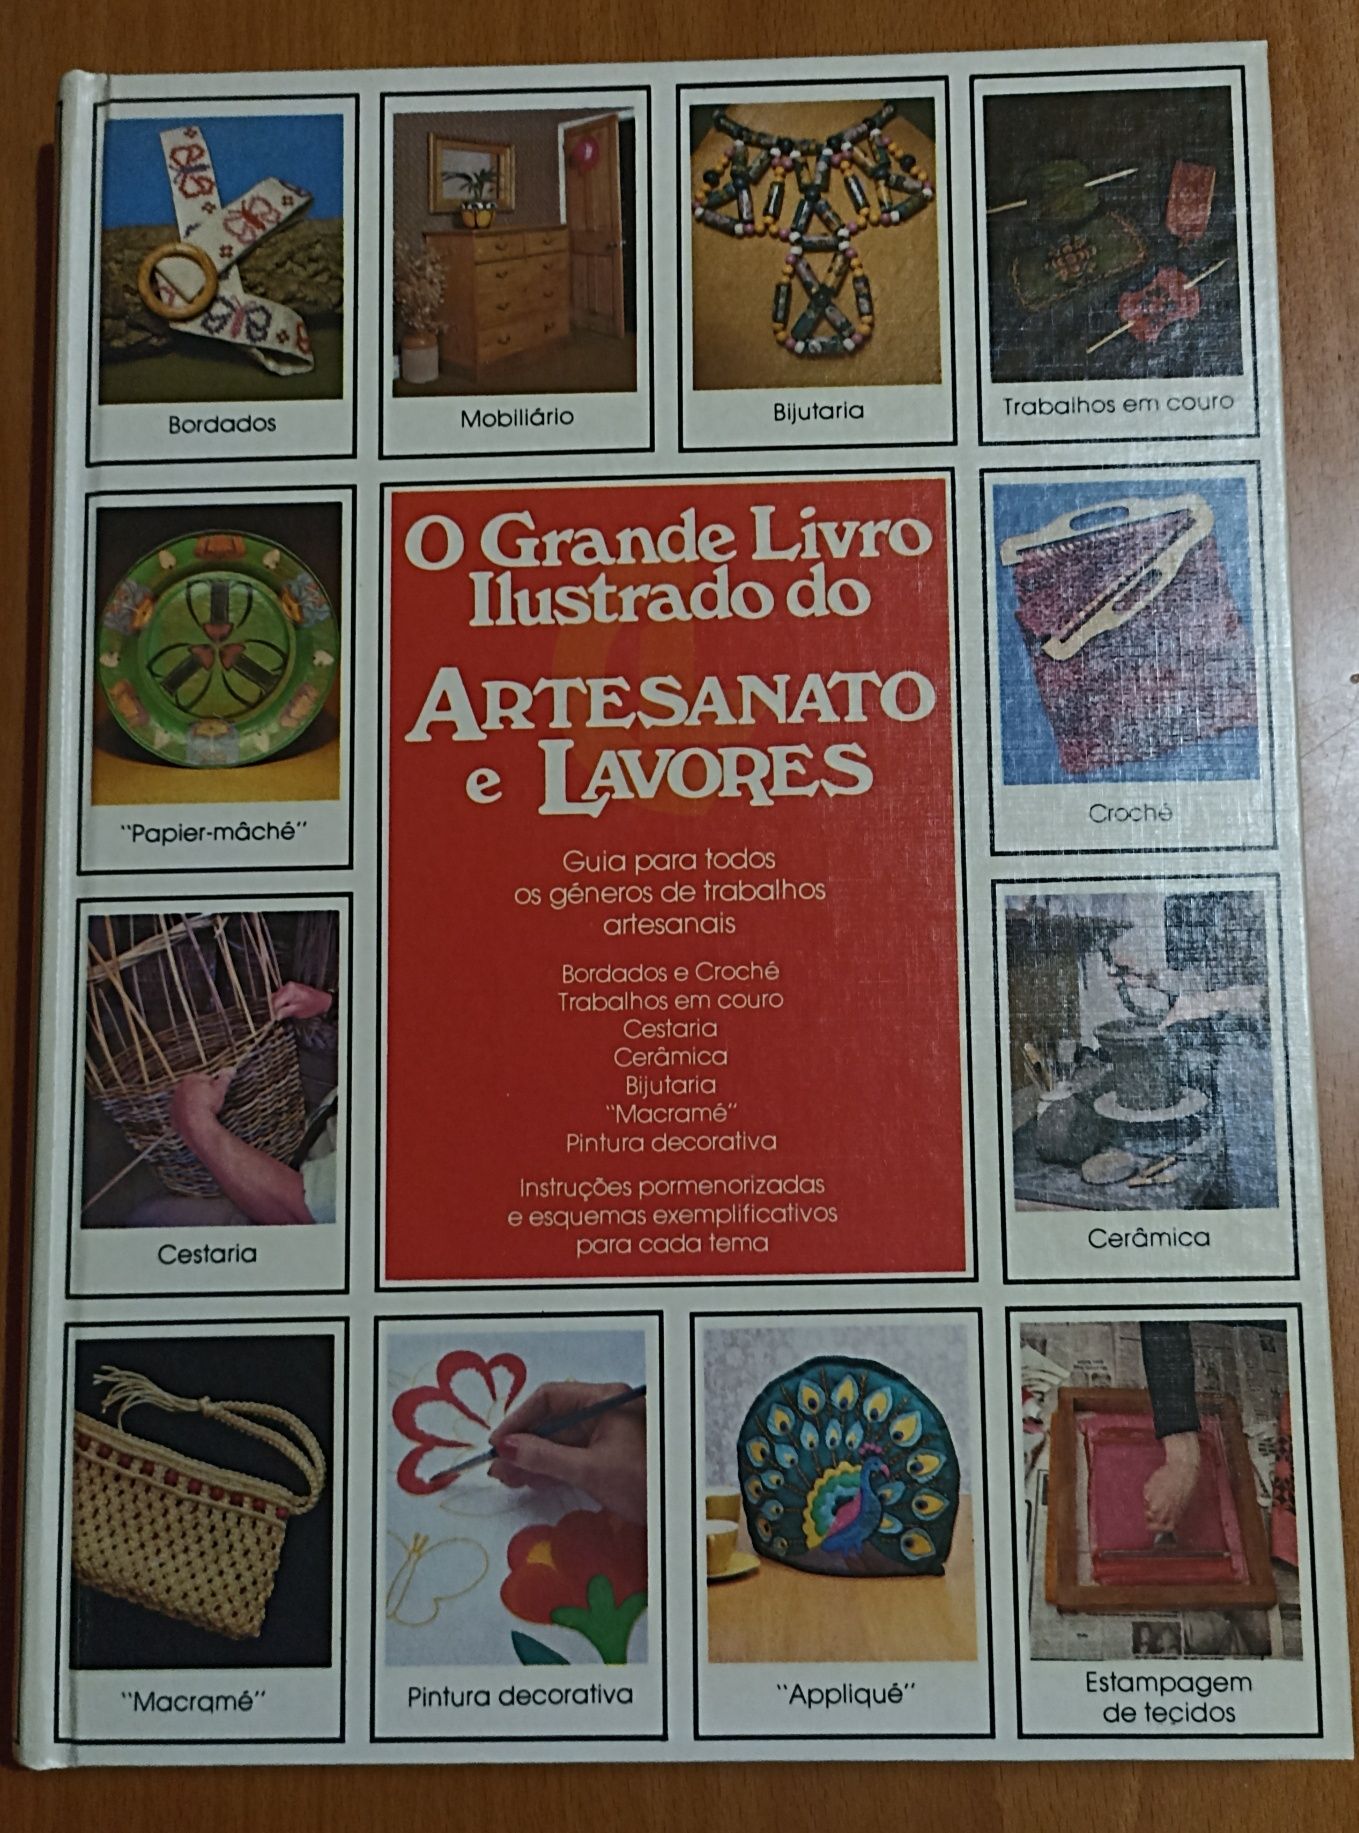 "O Grande Livro Ilustrado do Artesanato e Lavores"